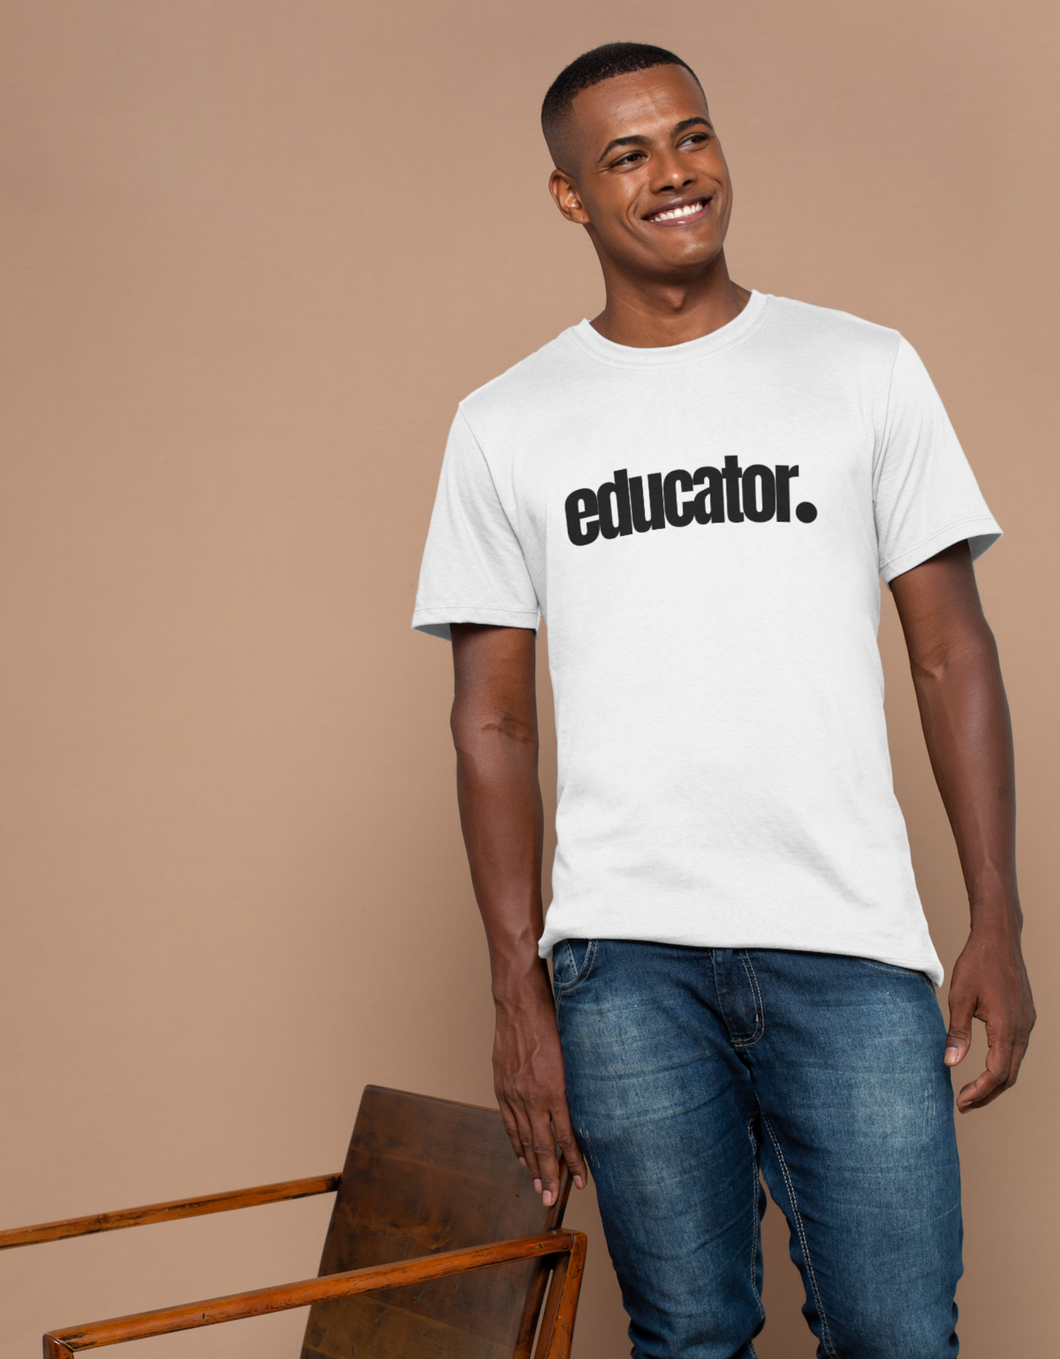 Educator. Men's Classic T-Shirt